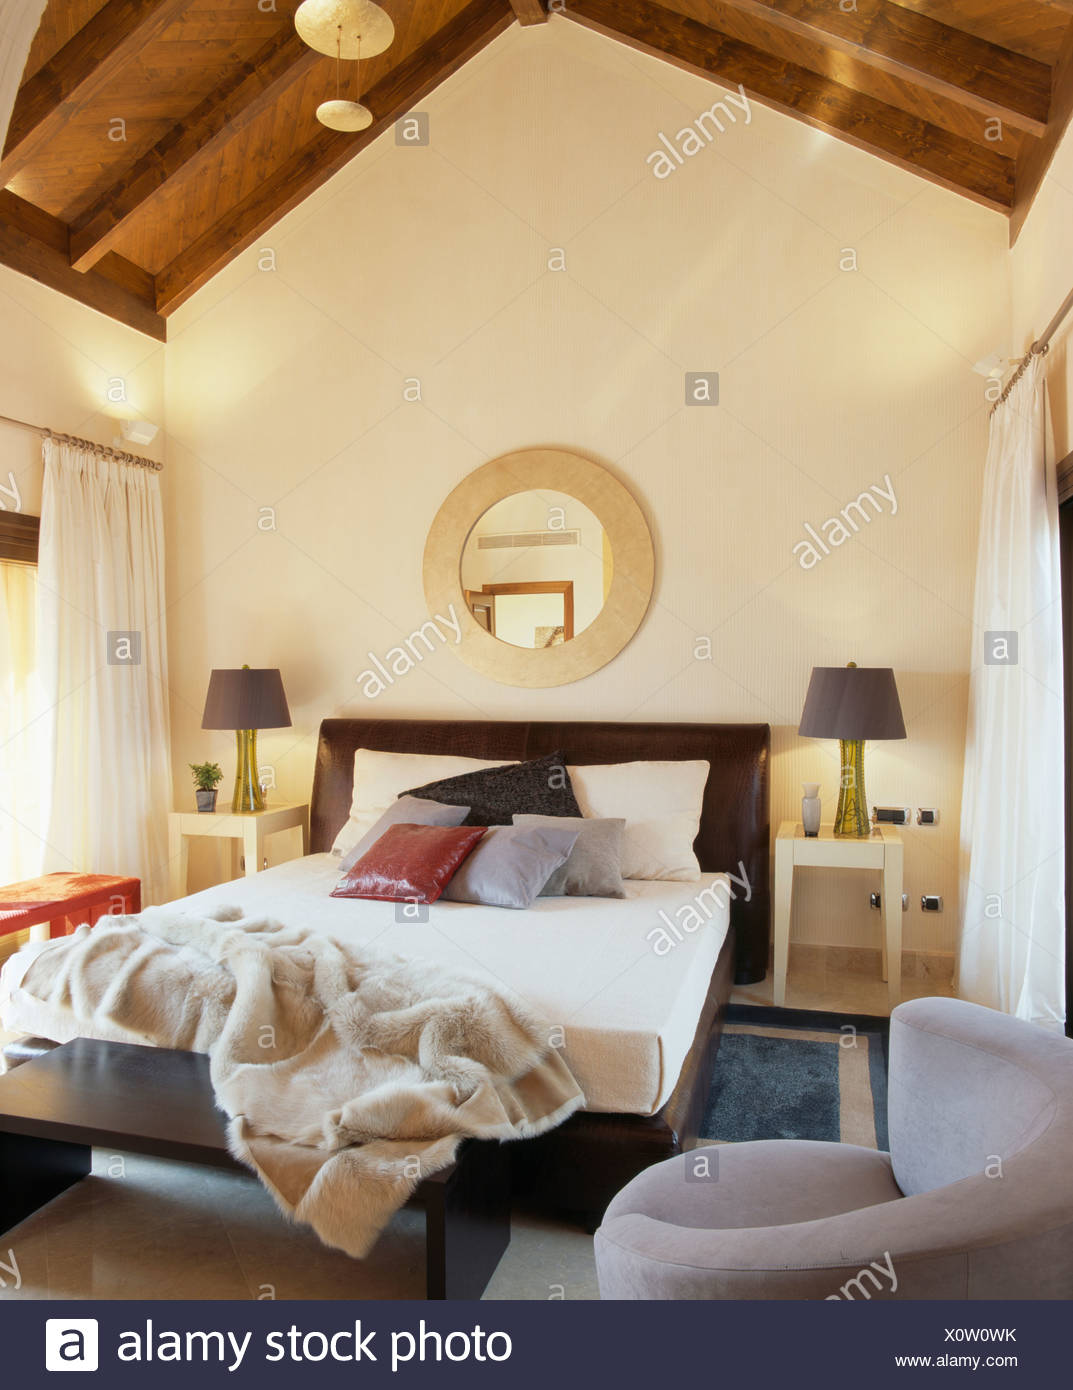 Circular Mirror Above Bed With Pale Cream Artificial Fur